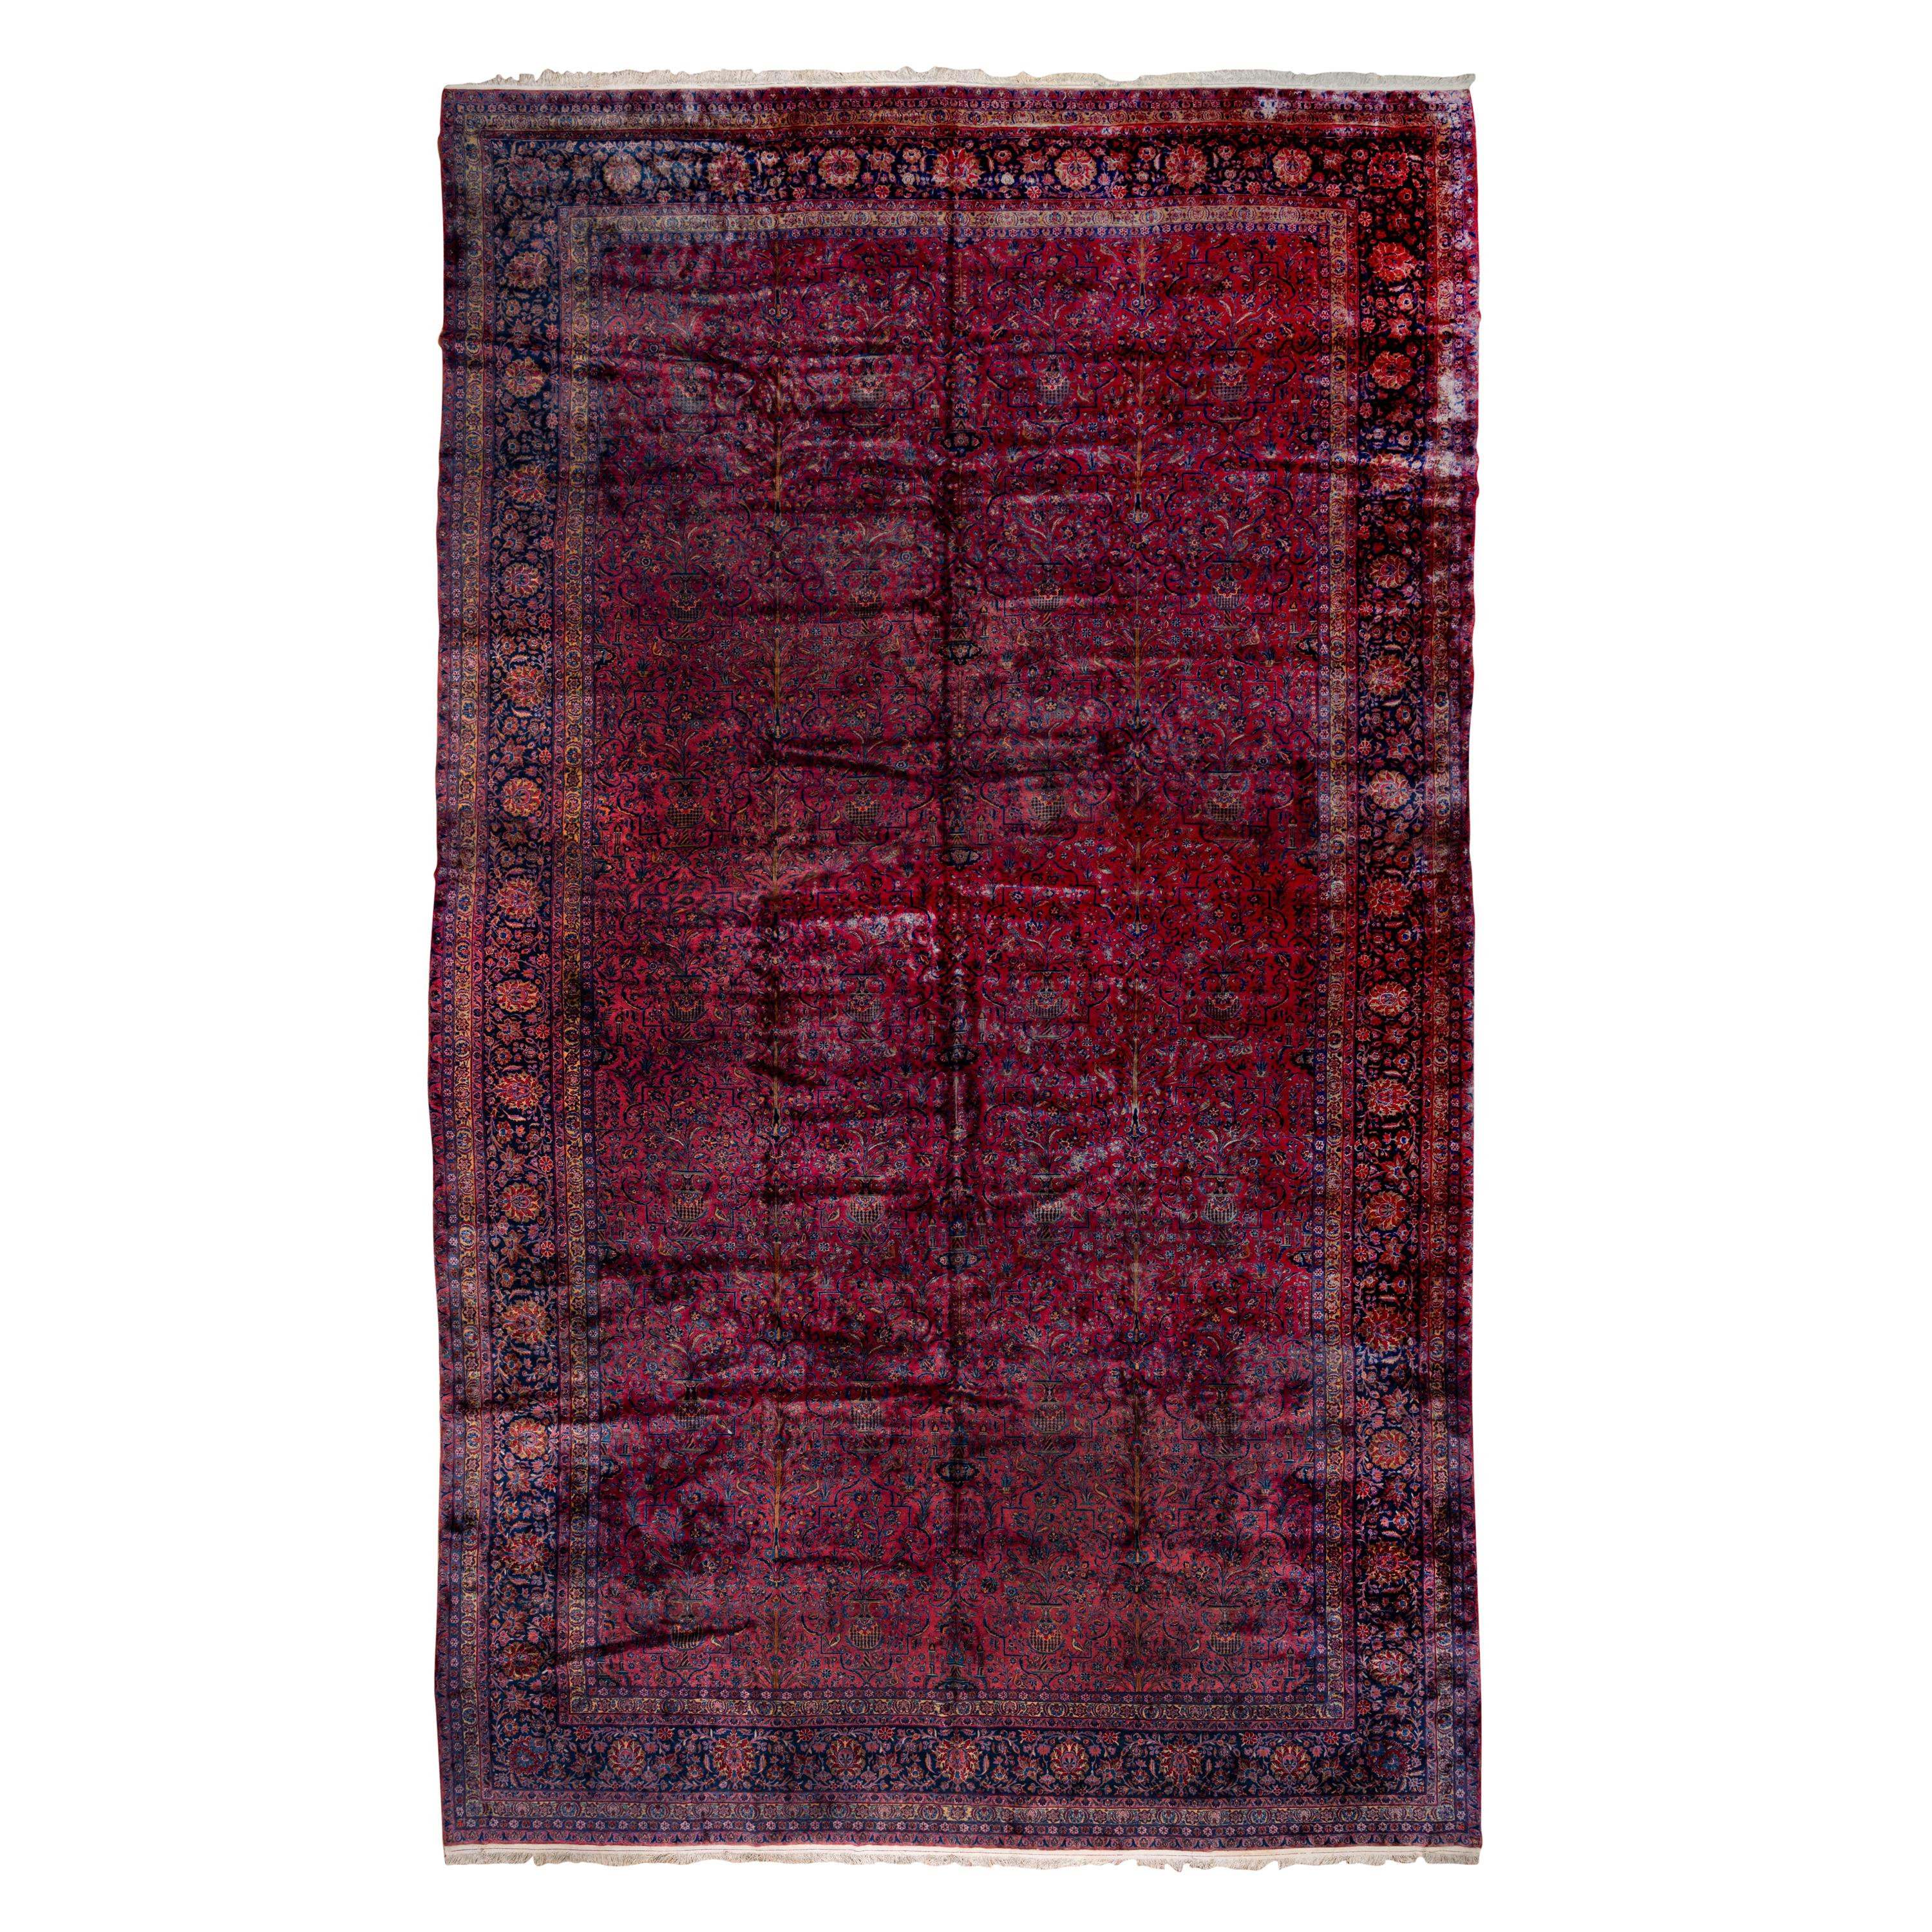 Massive Antique Persian Sarouk Carpet, Red & Purple All-Over Field, Navy Borders